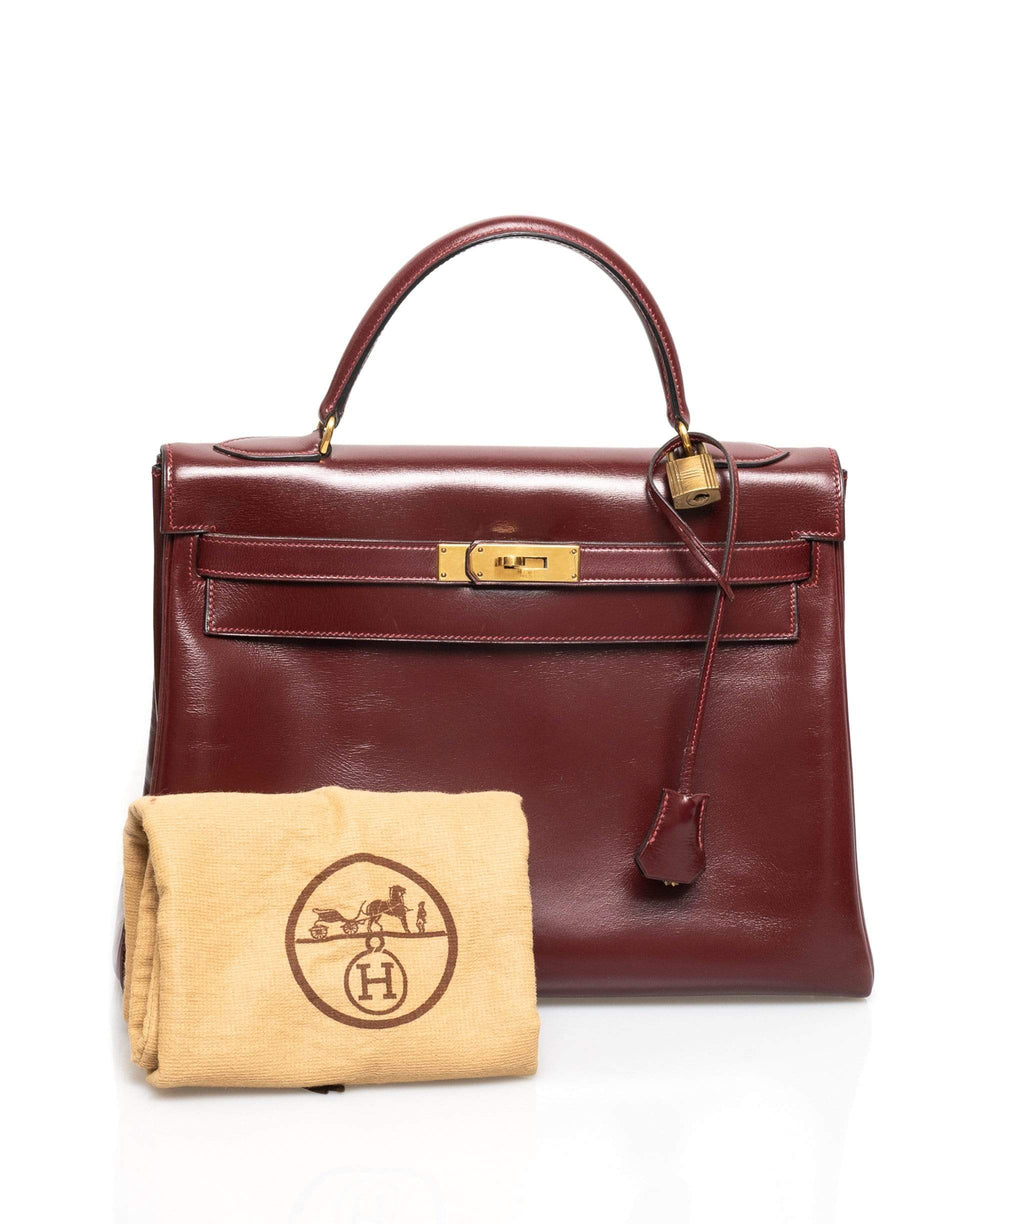 Hermes Kelly woman handbag Togo grainy leather 32cm burgundy/wine red